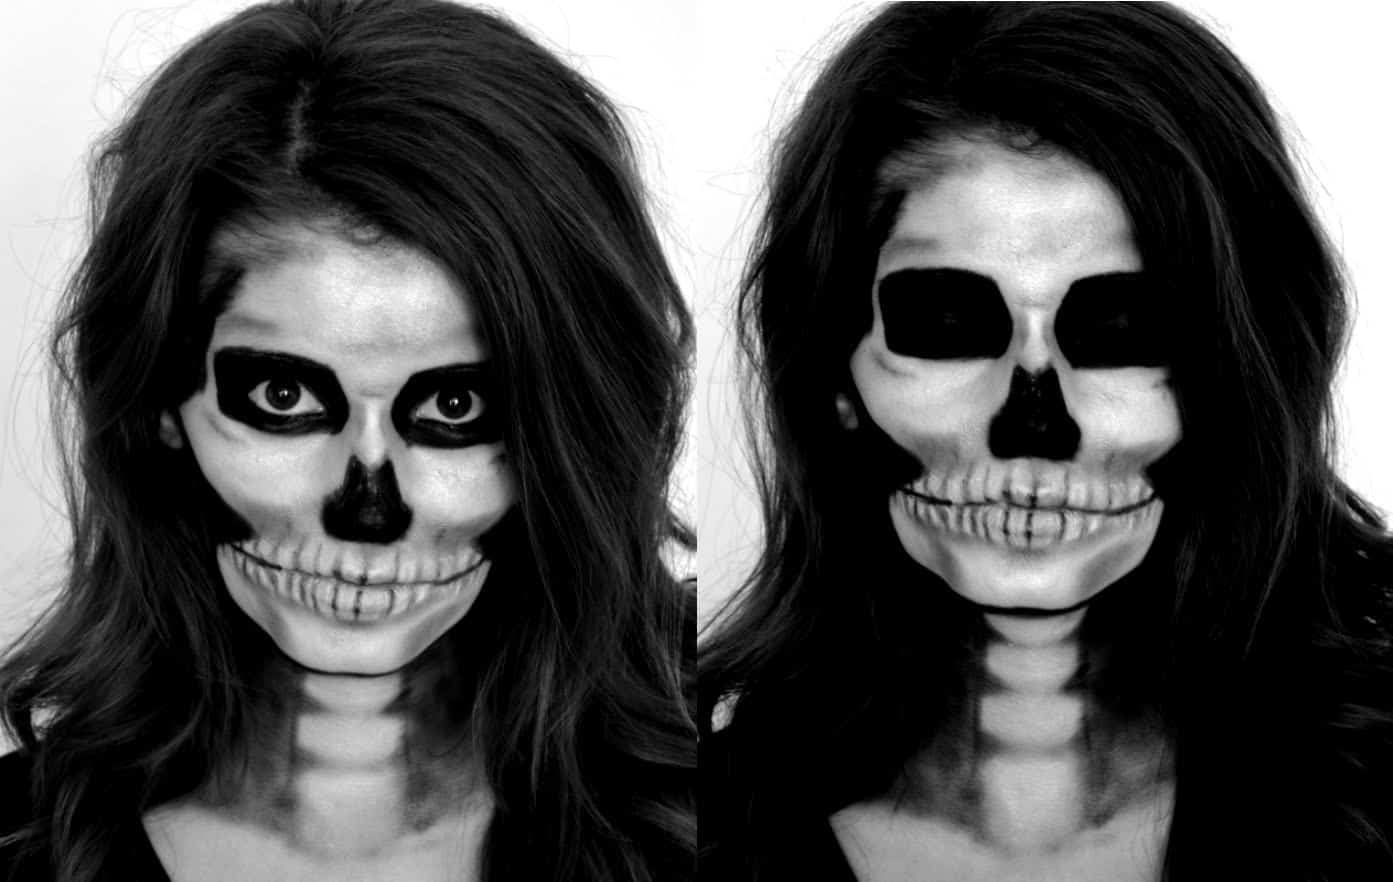 Creepy skeleton makeup